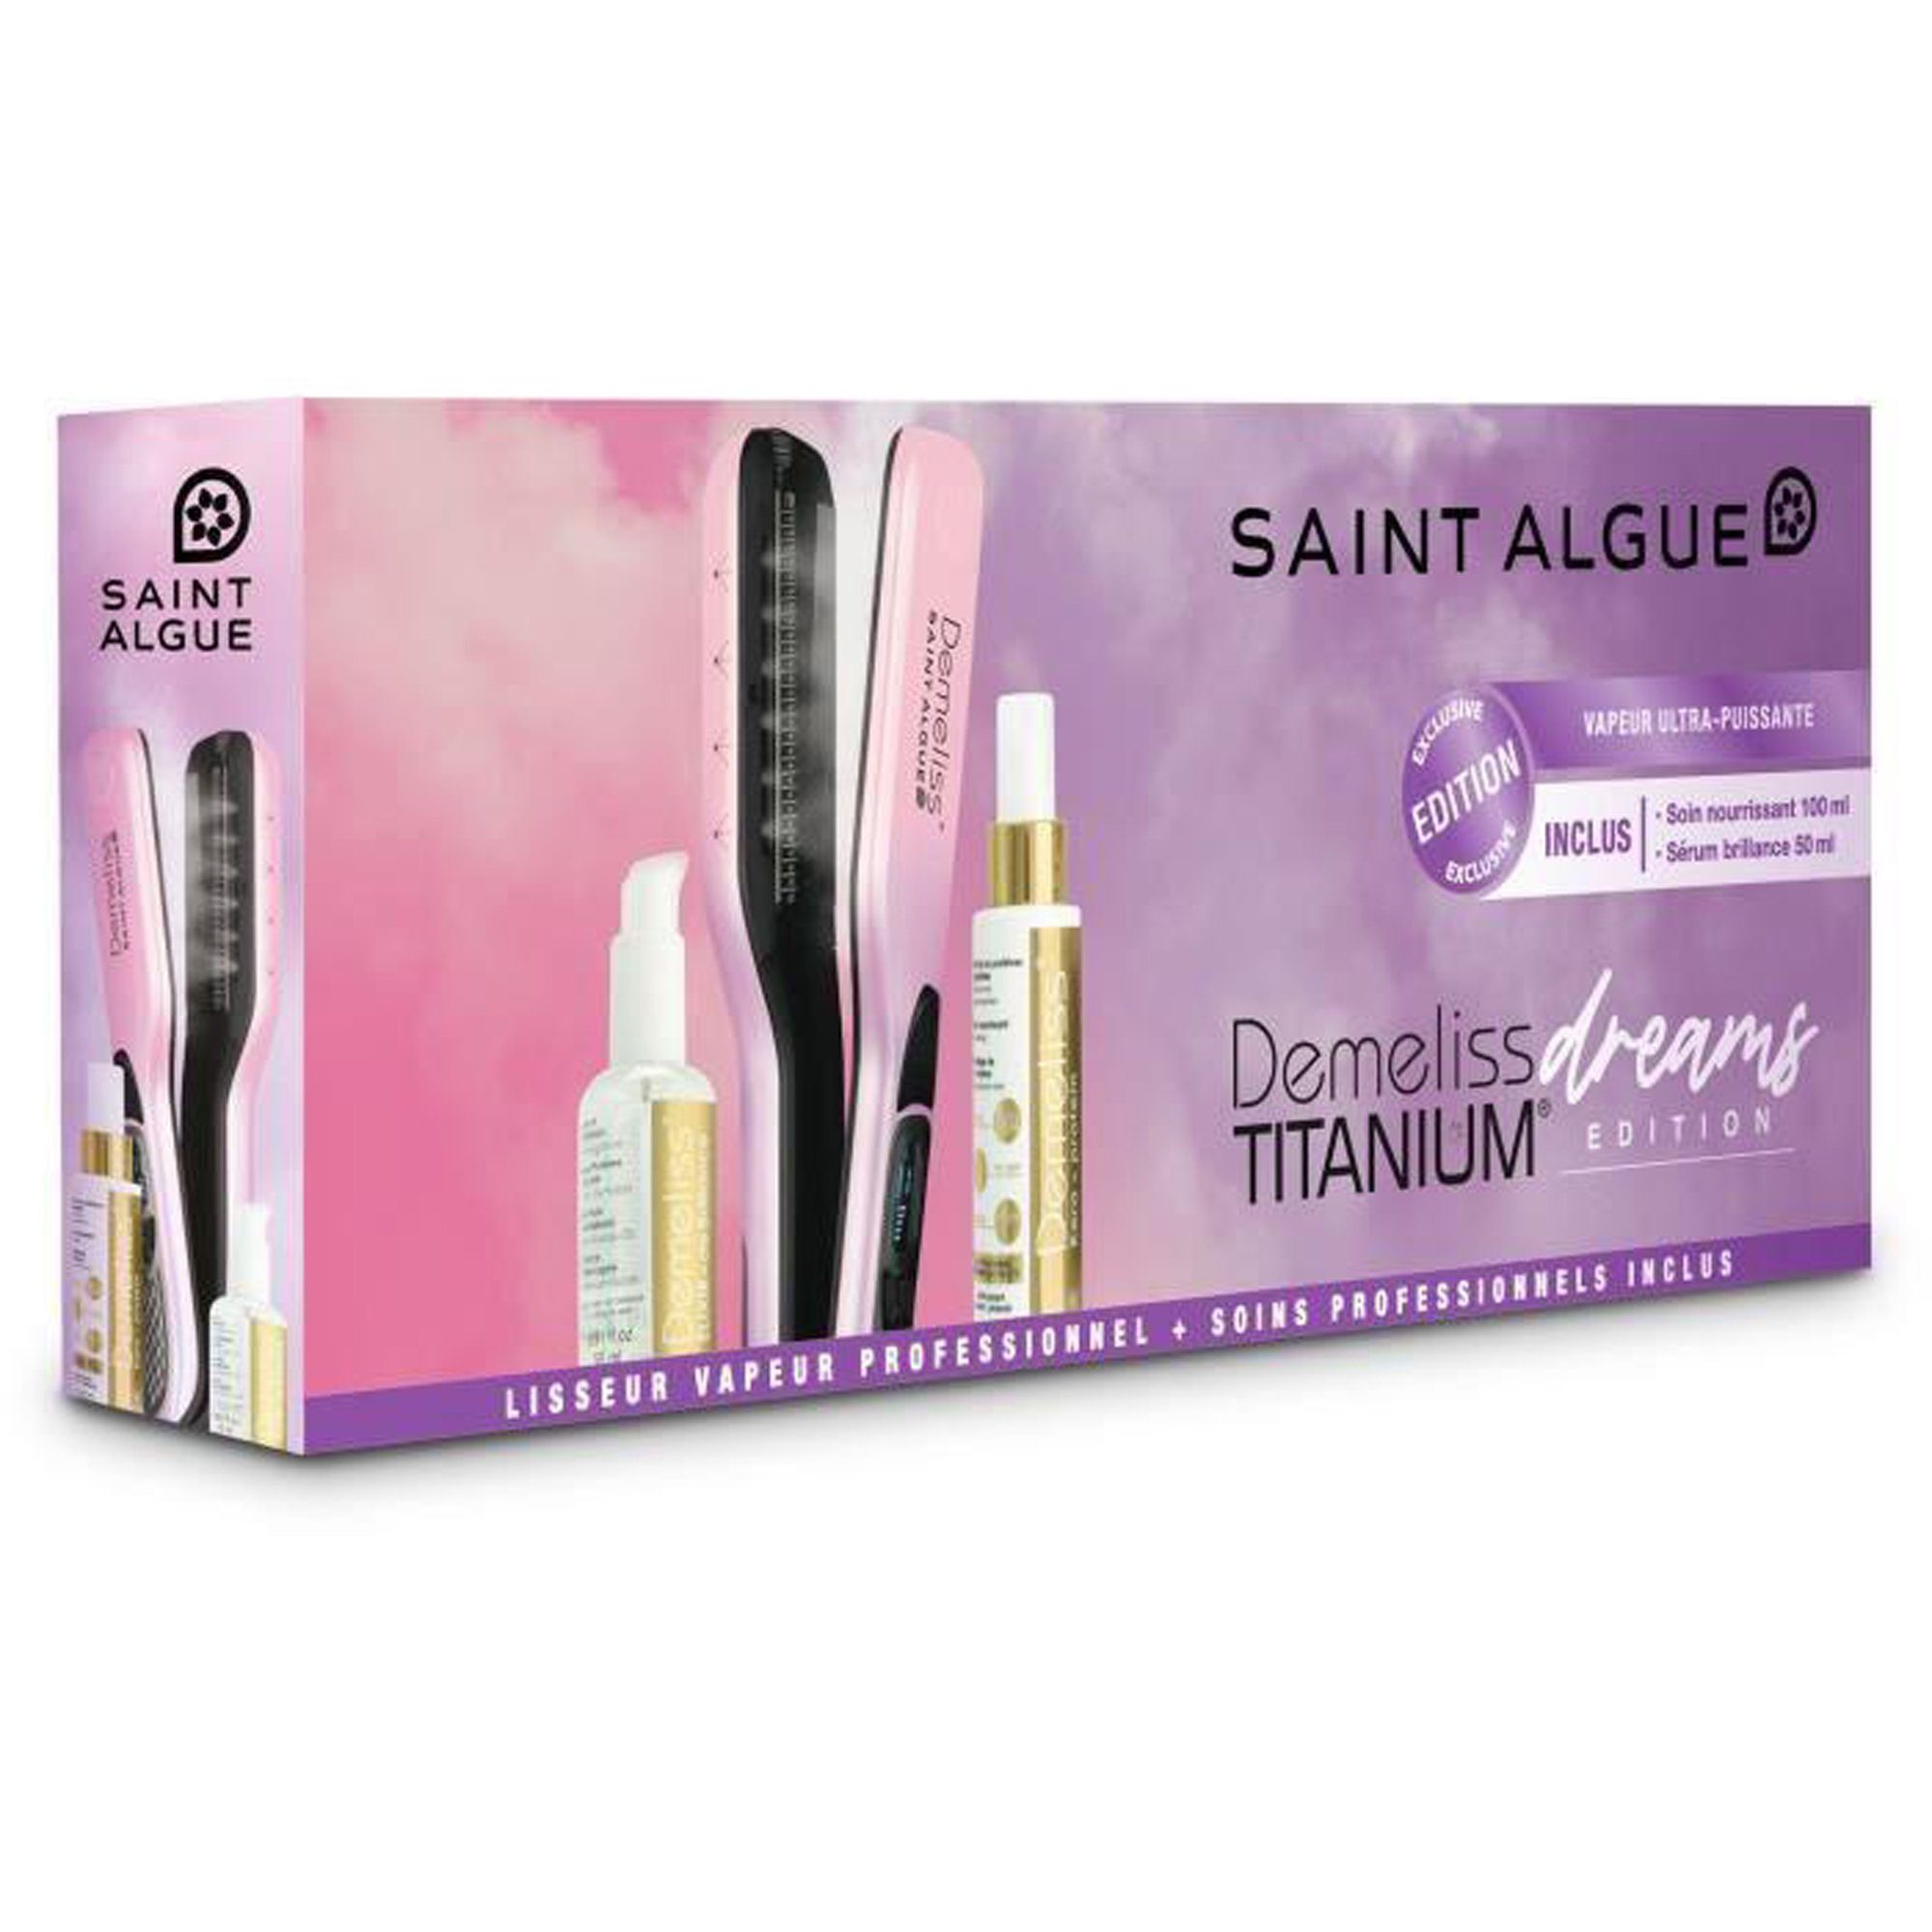 Demeliss Saint Algue Spray de Brillance mit Titan-Beschichtung, + Titanium Dreams 3964, DEMELISS Elixir Edition Haarstyler Serum Kera Protein